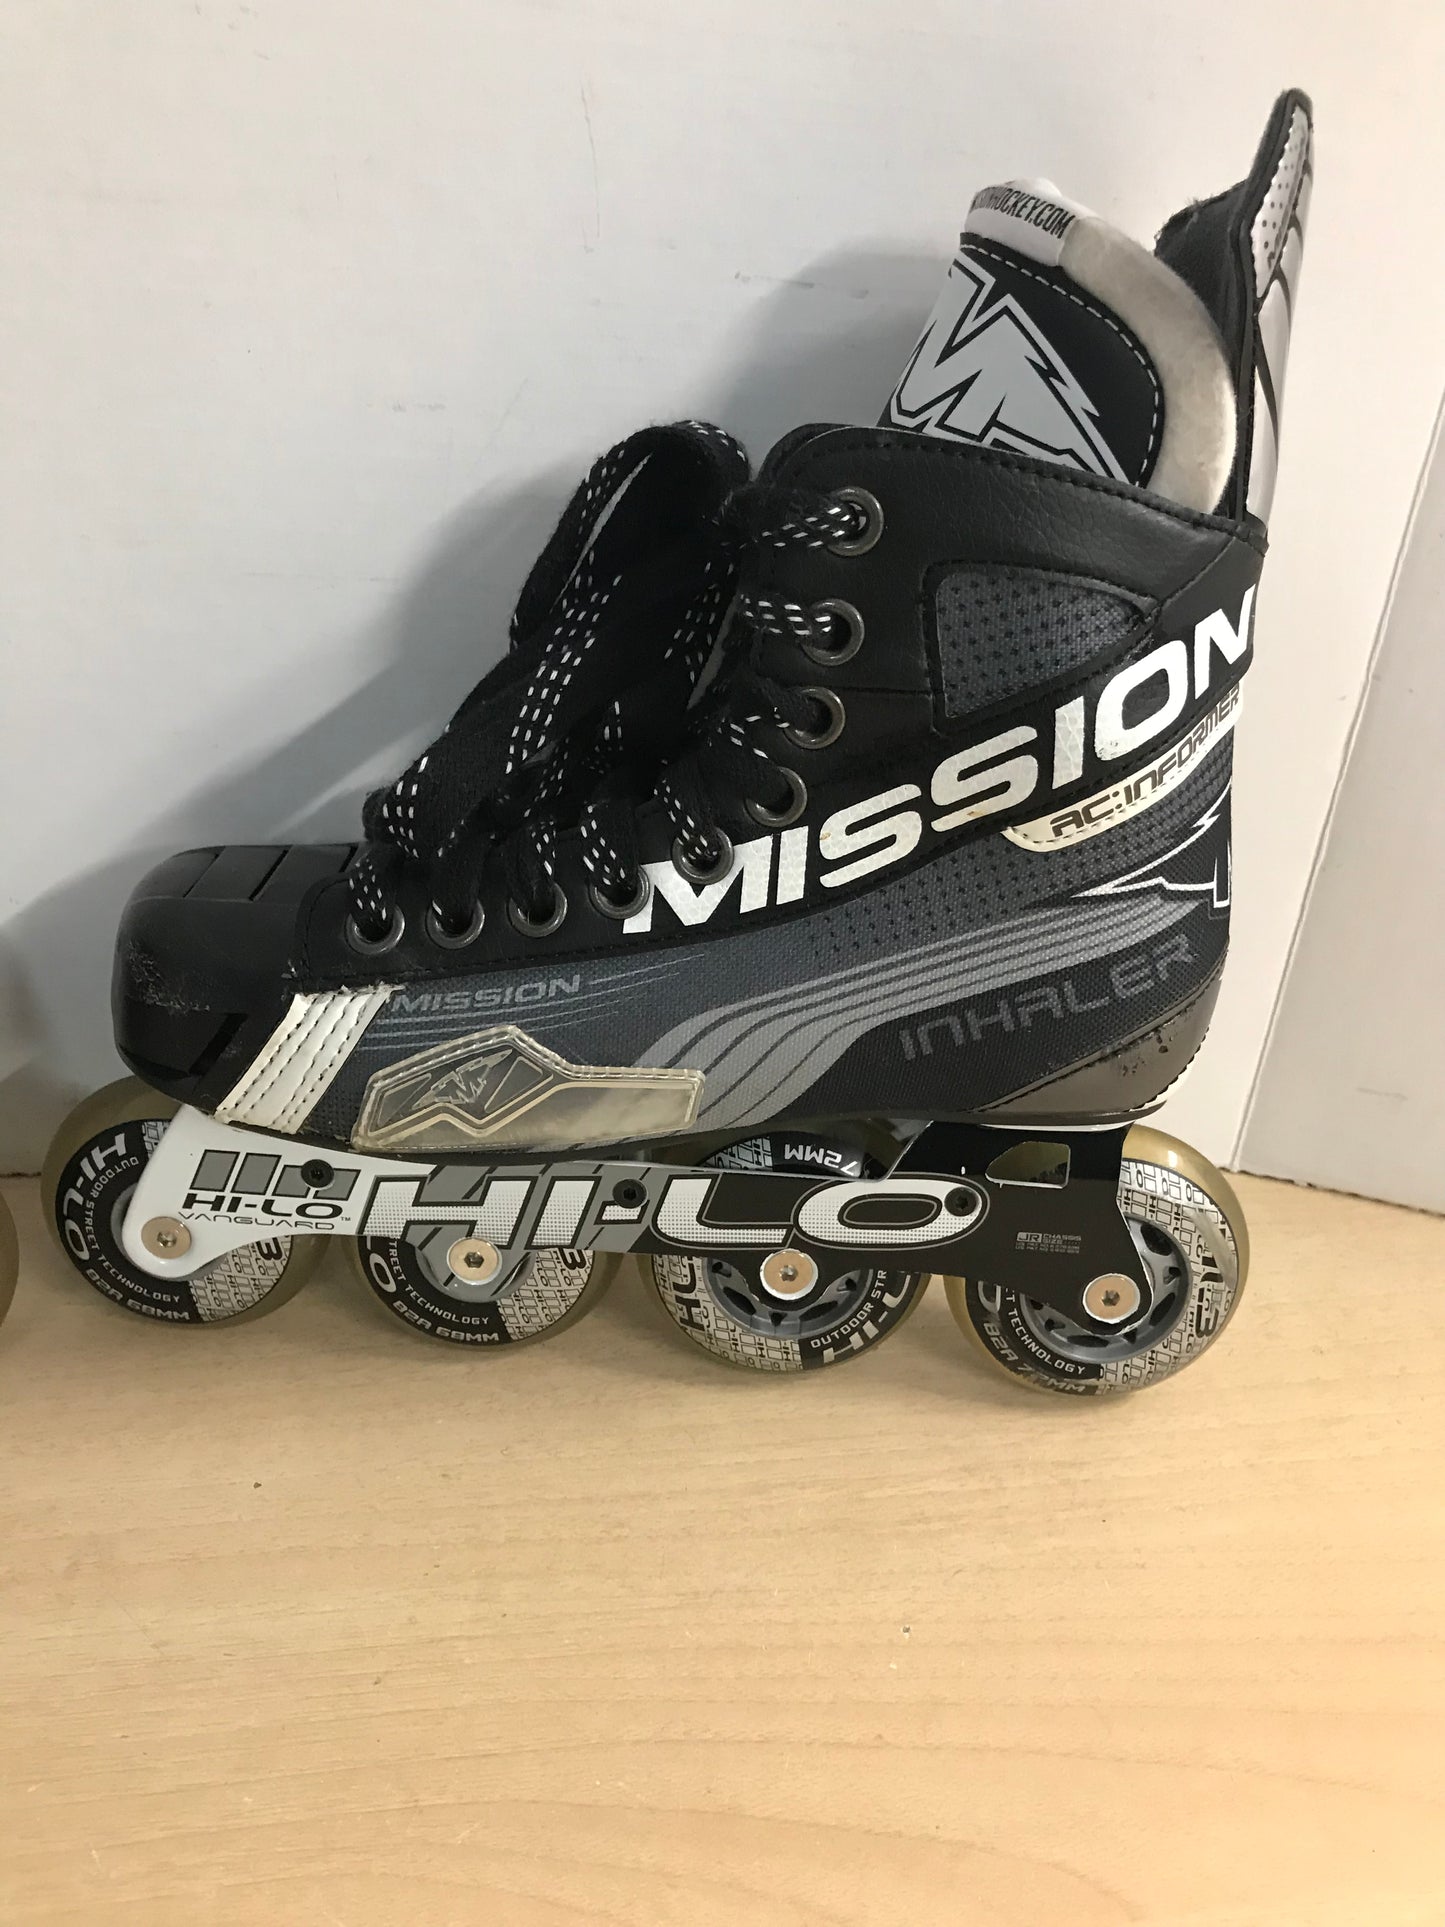 Hockey Roller Hockey Skates Child Size 4 E Shoe Size Mission Inhaler Informer Worn Twice